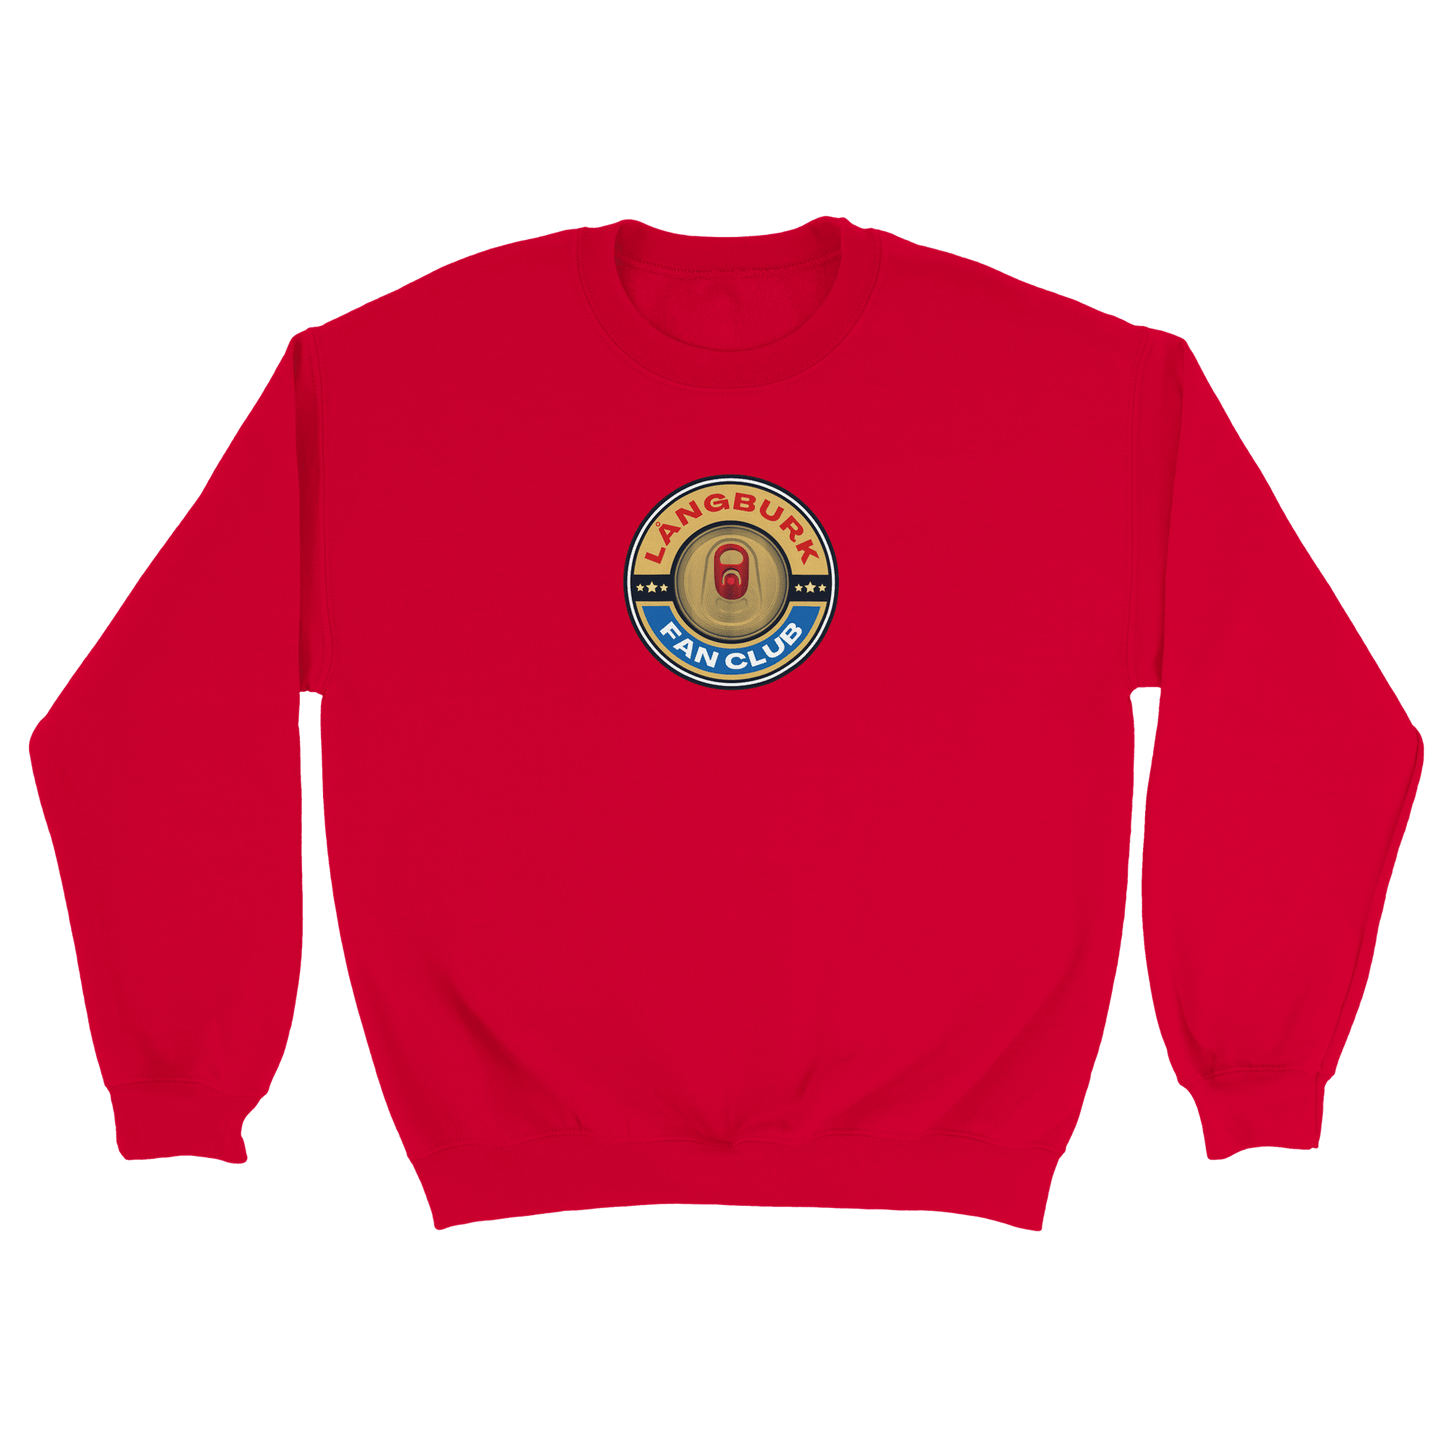 Långburk Fan Club Norrland Edition - Sweatshirt Röd